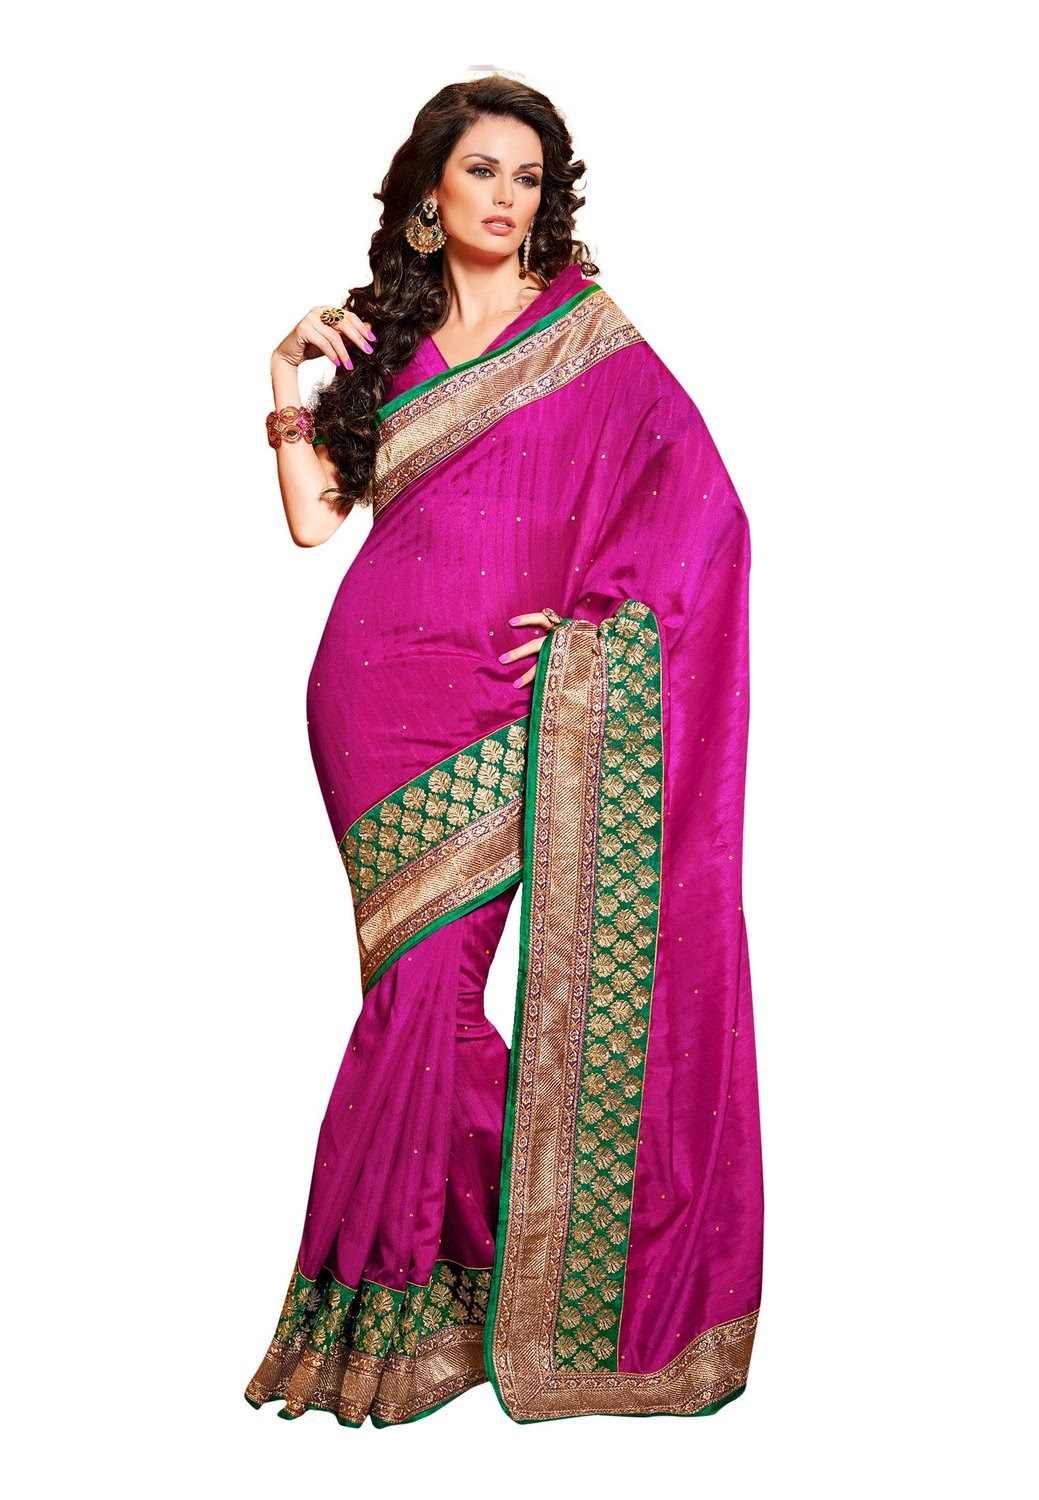  Rani color with green border bhagalpuri Silk Saree